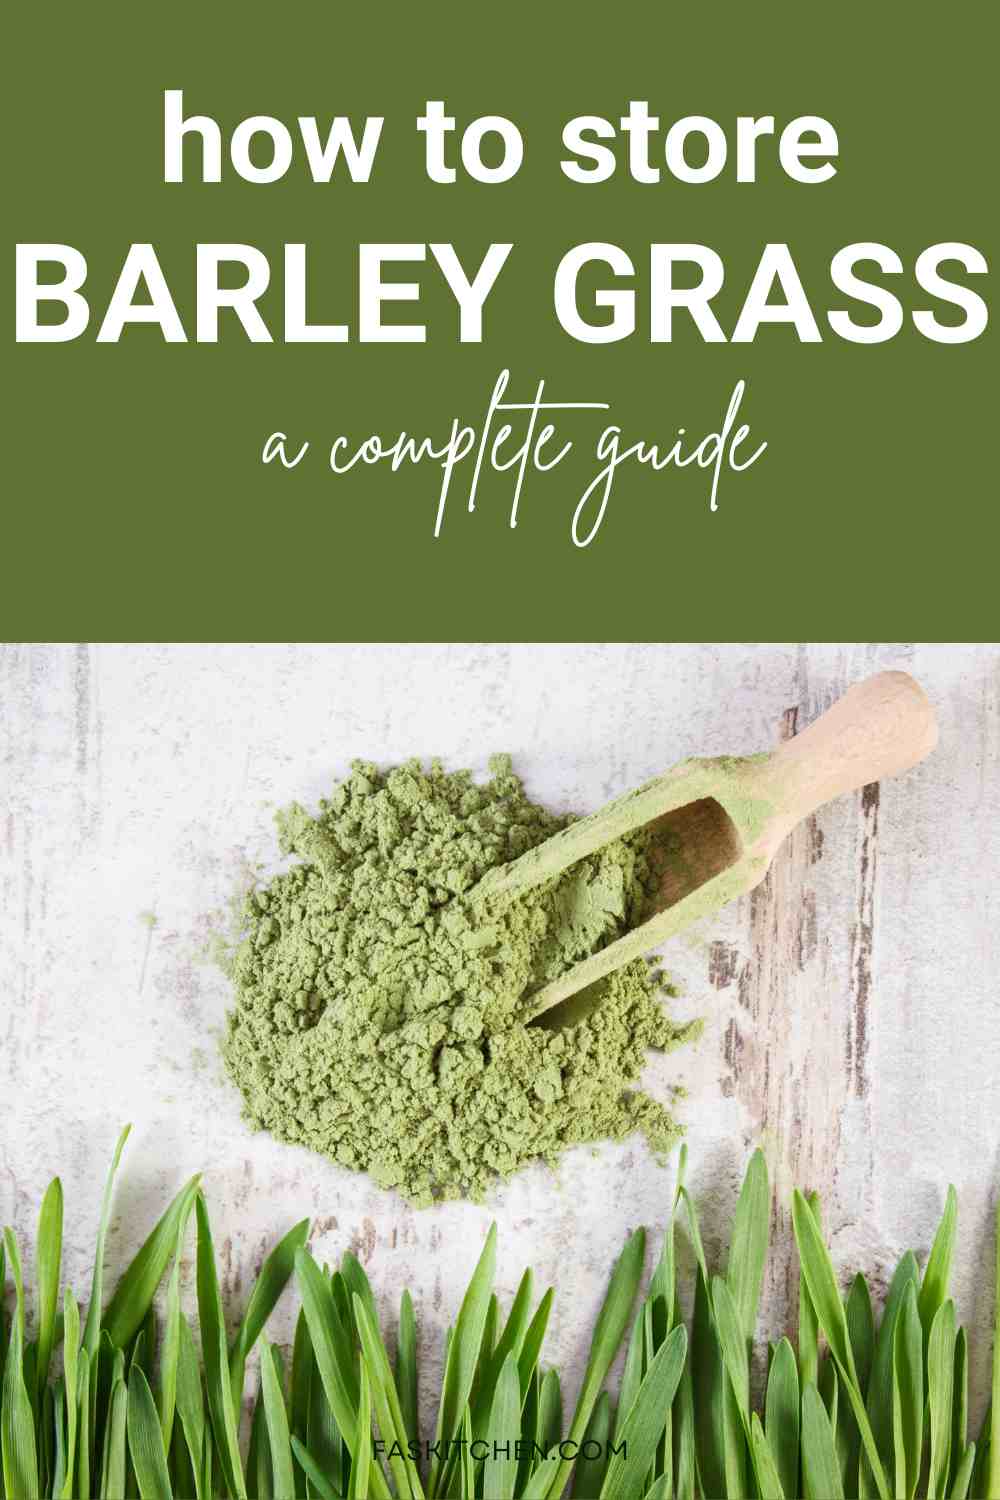 barley grass store